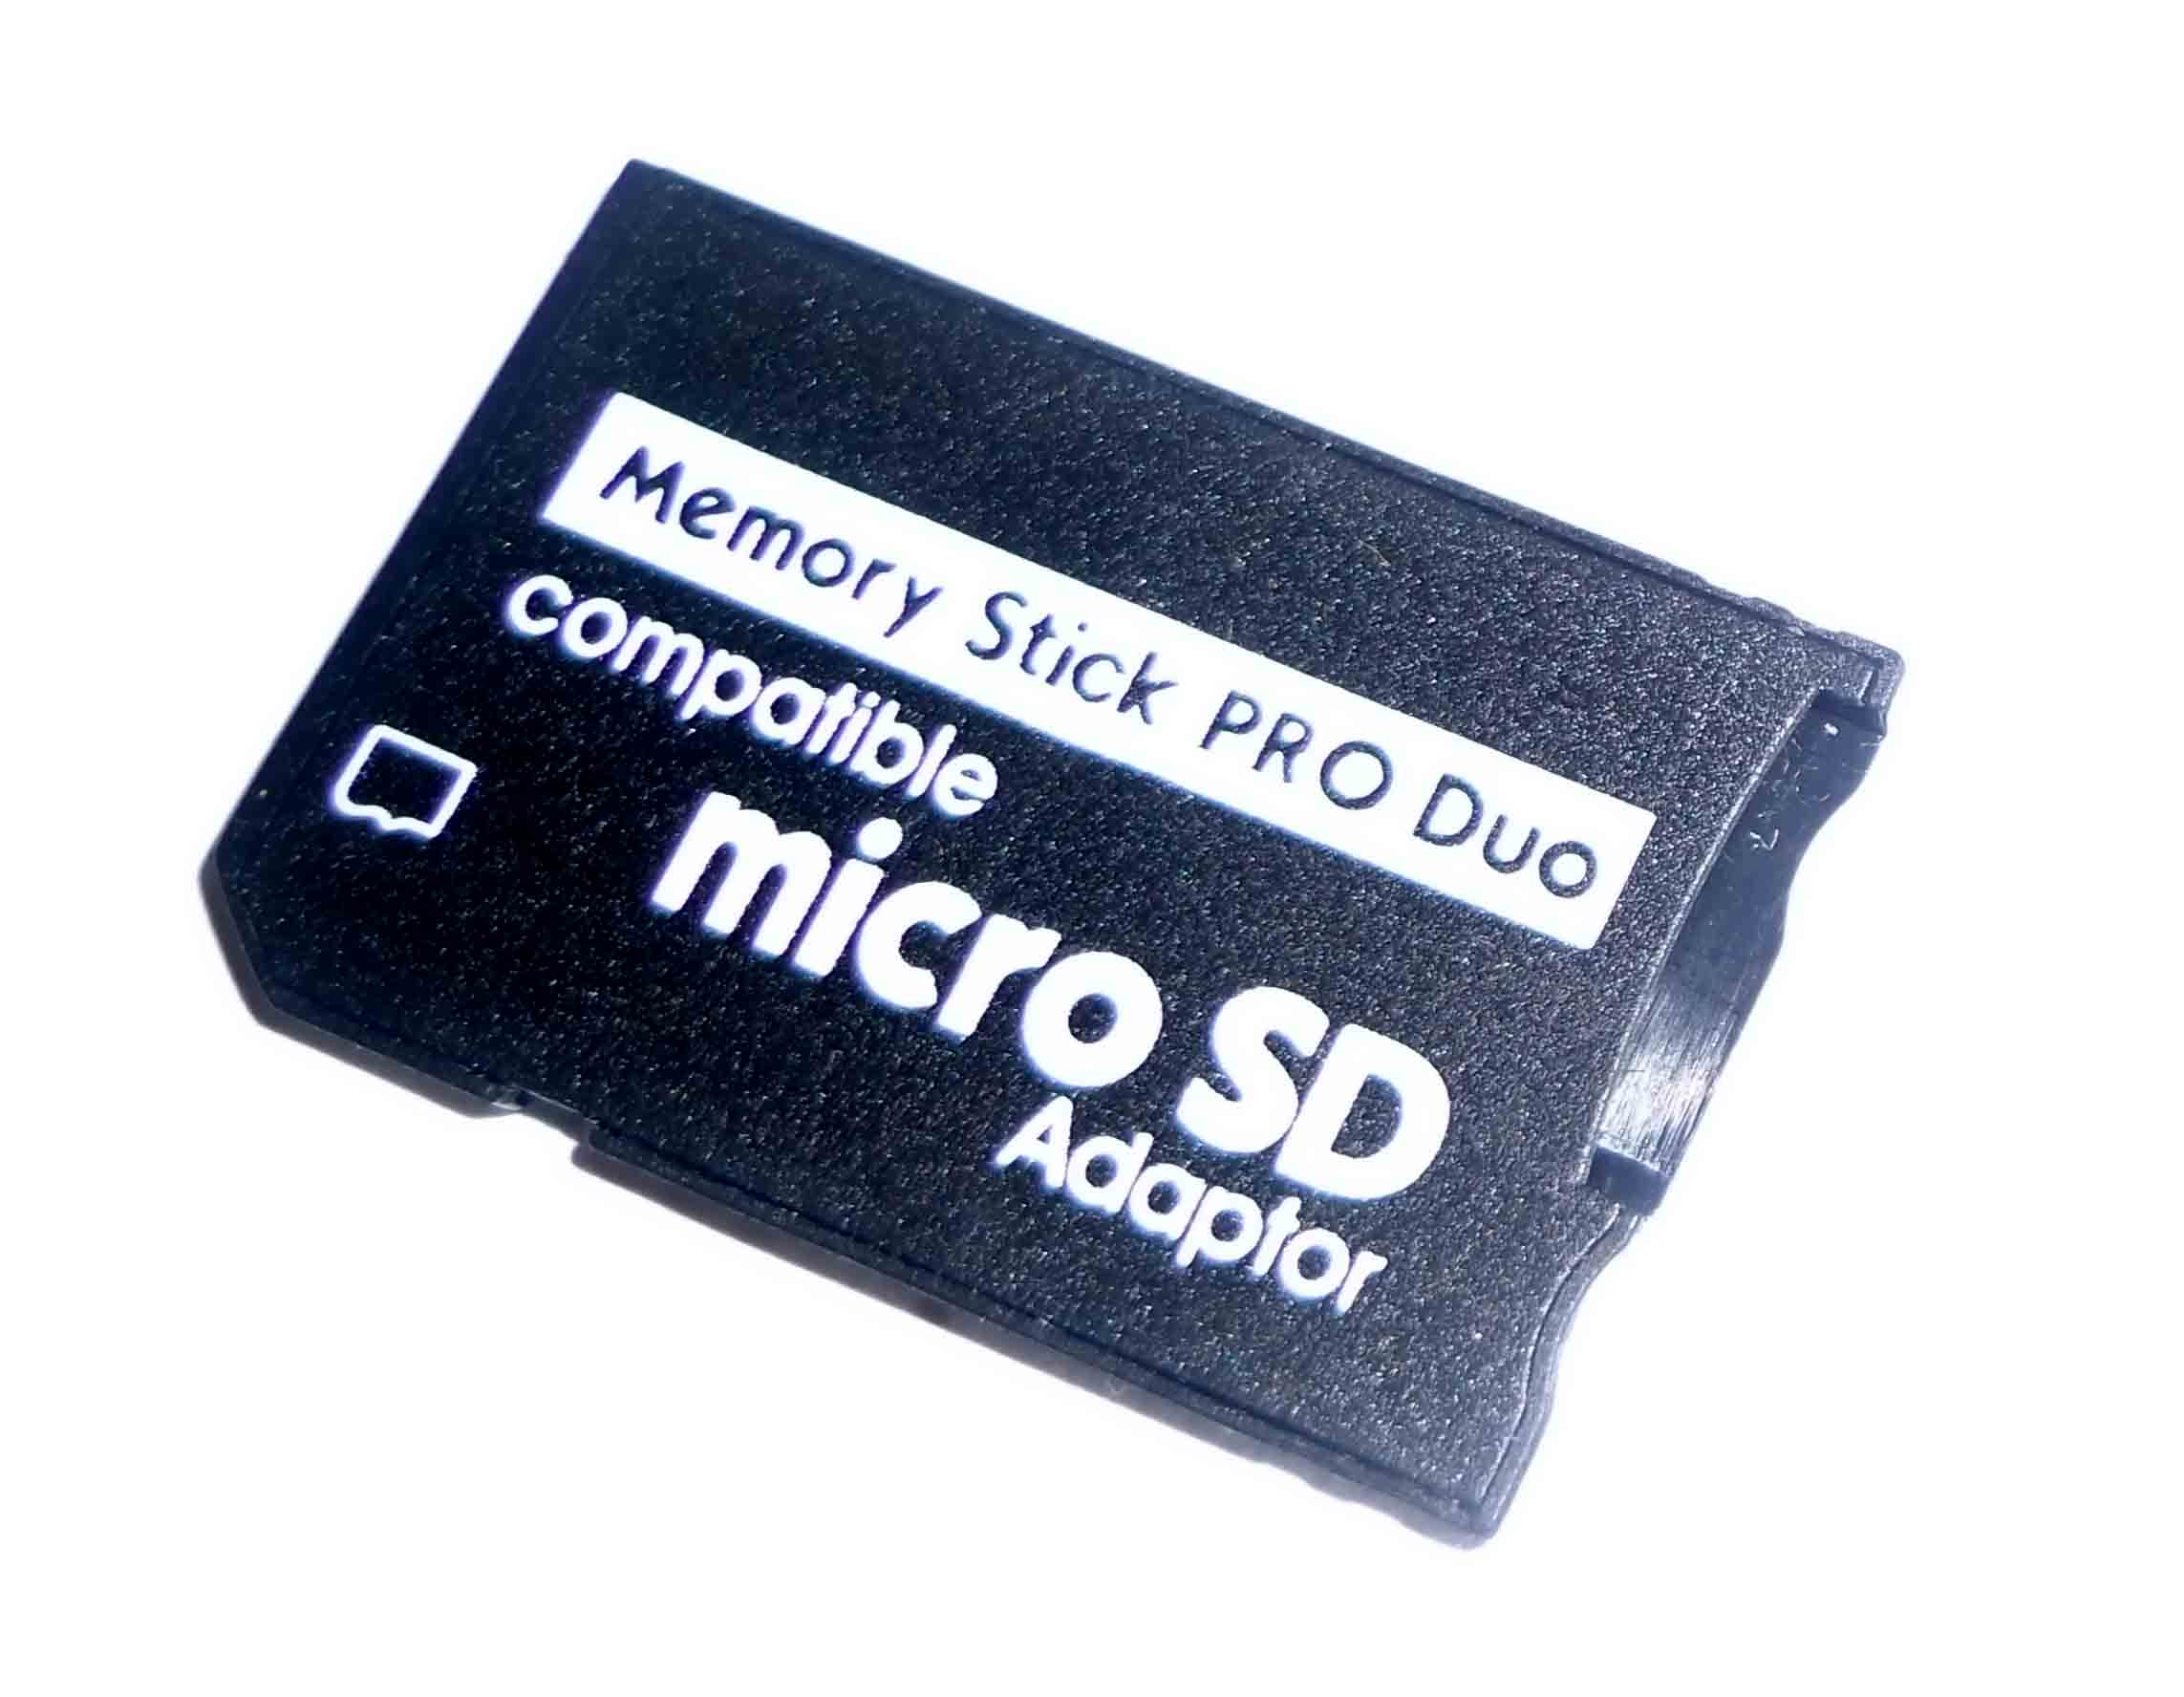 Ms ms pro купить. Sony Memory Stick Duo Adaptor. MS Pro Duo адаптер. Memory Stick Pro Duo Adapter. Флешка Memory Stick Pro.